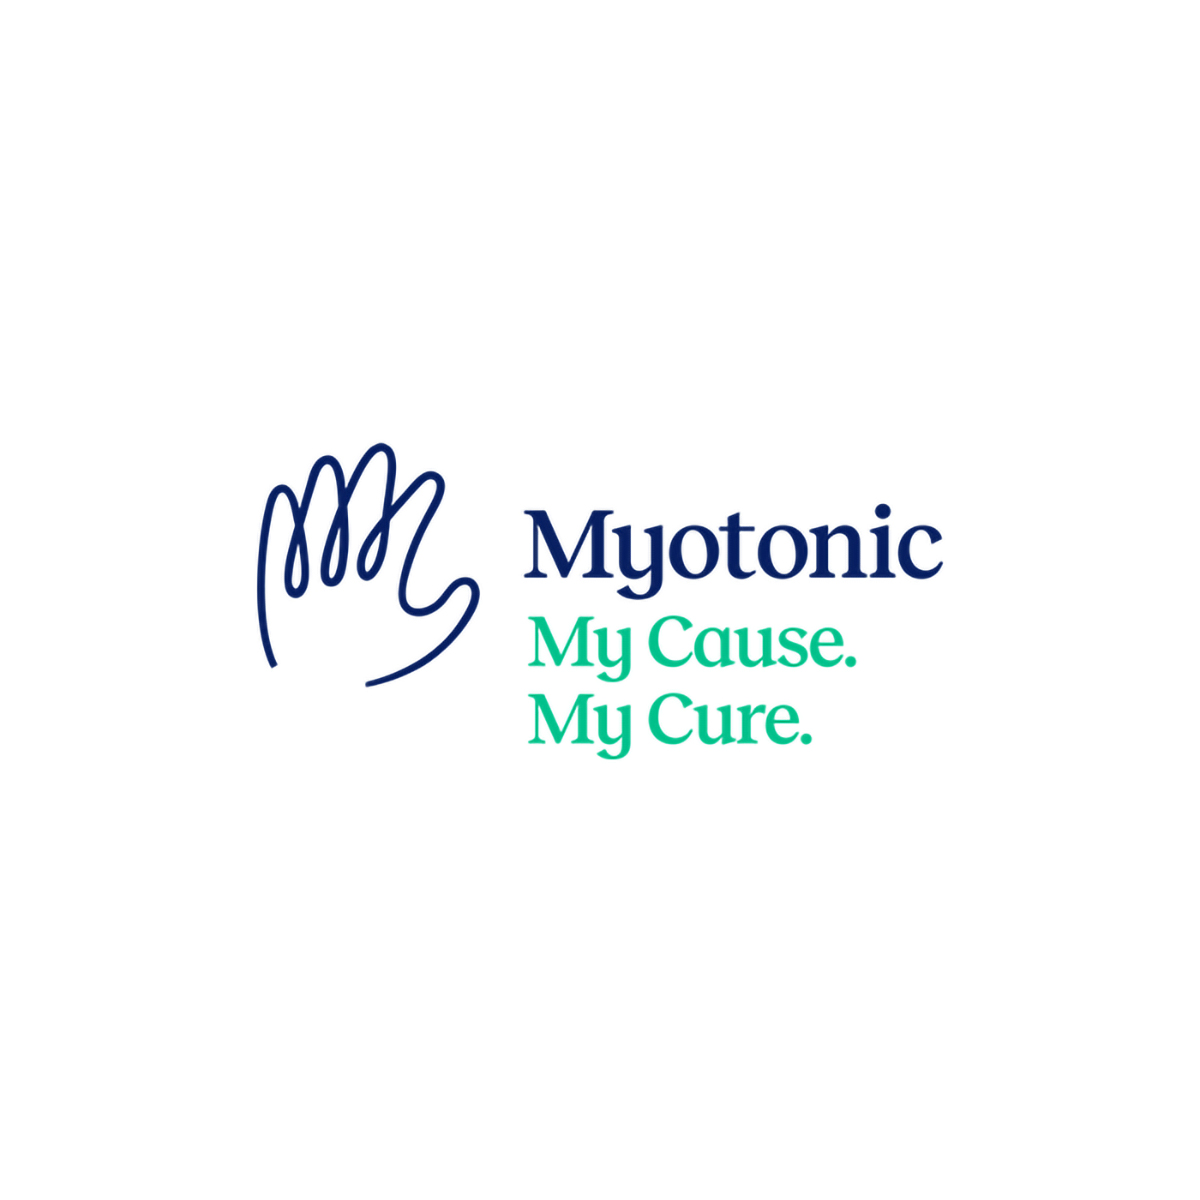 Myotonic Dystrophy Foundation